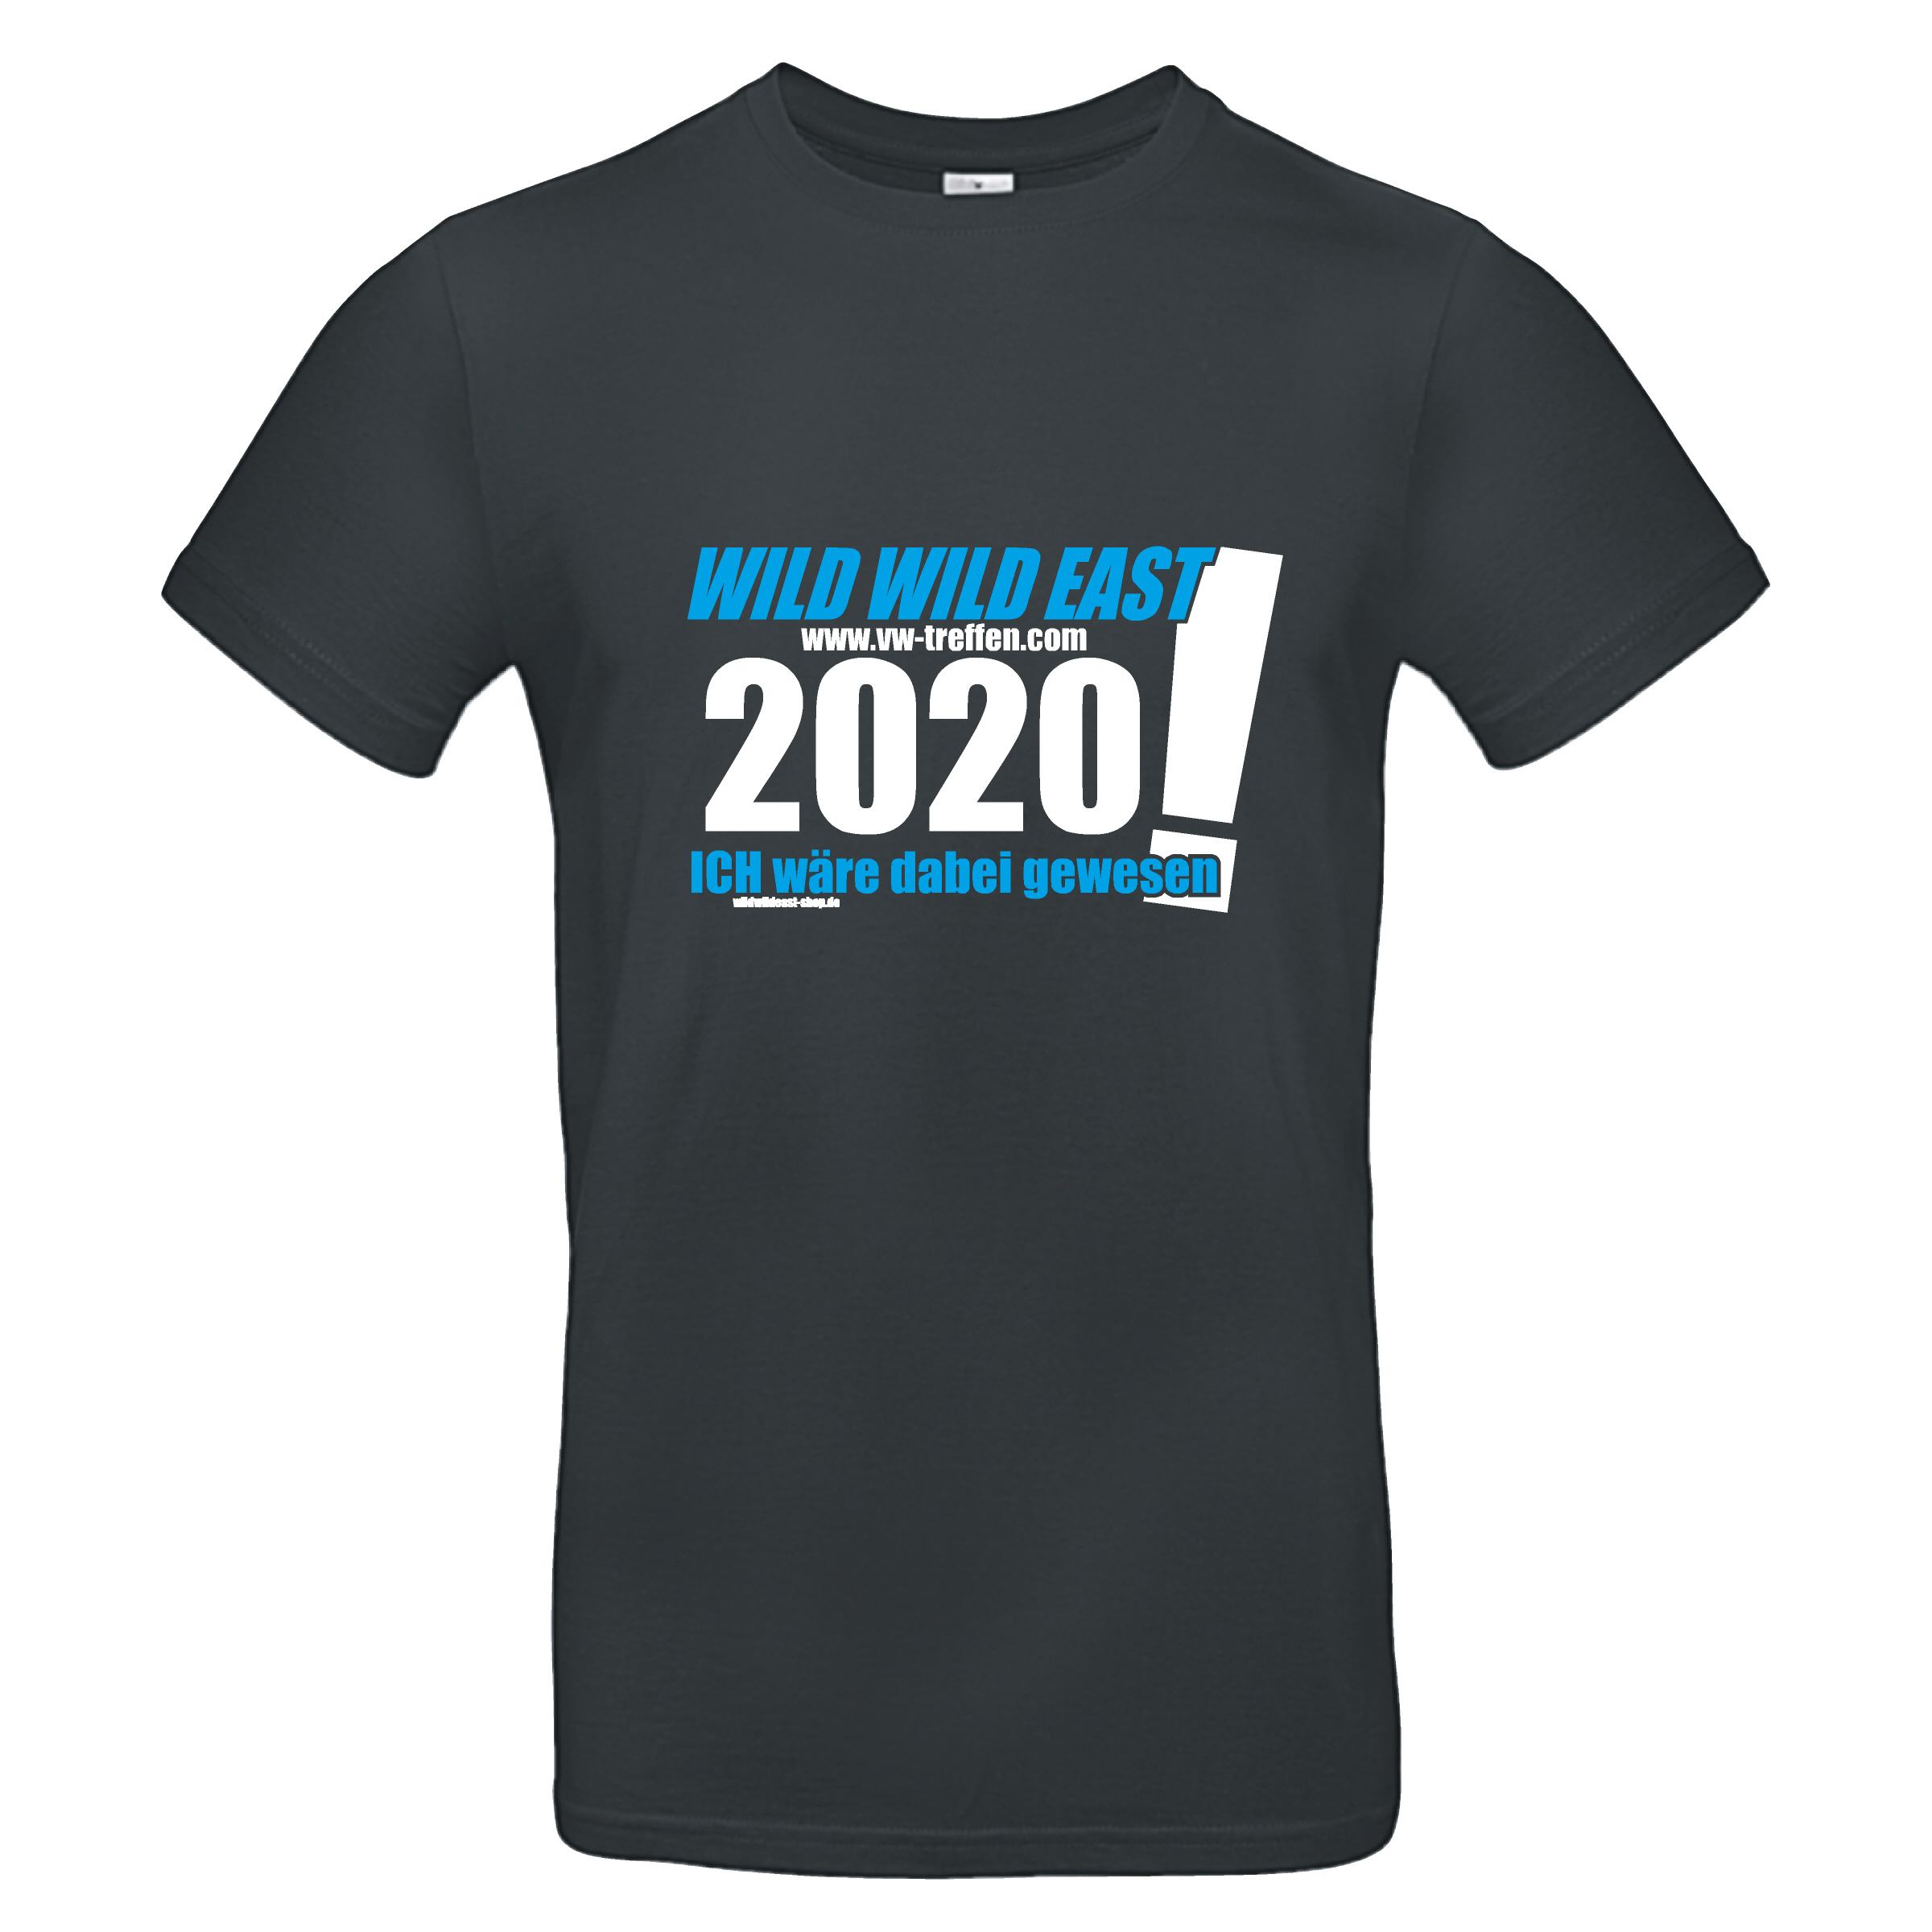 Event Shirt WWE "Edition 2020"